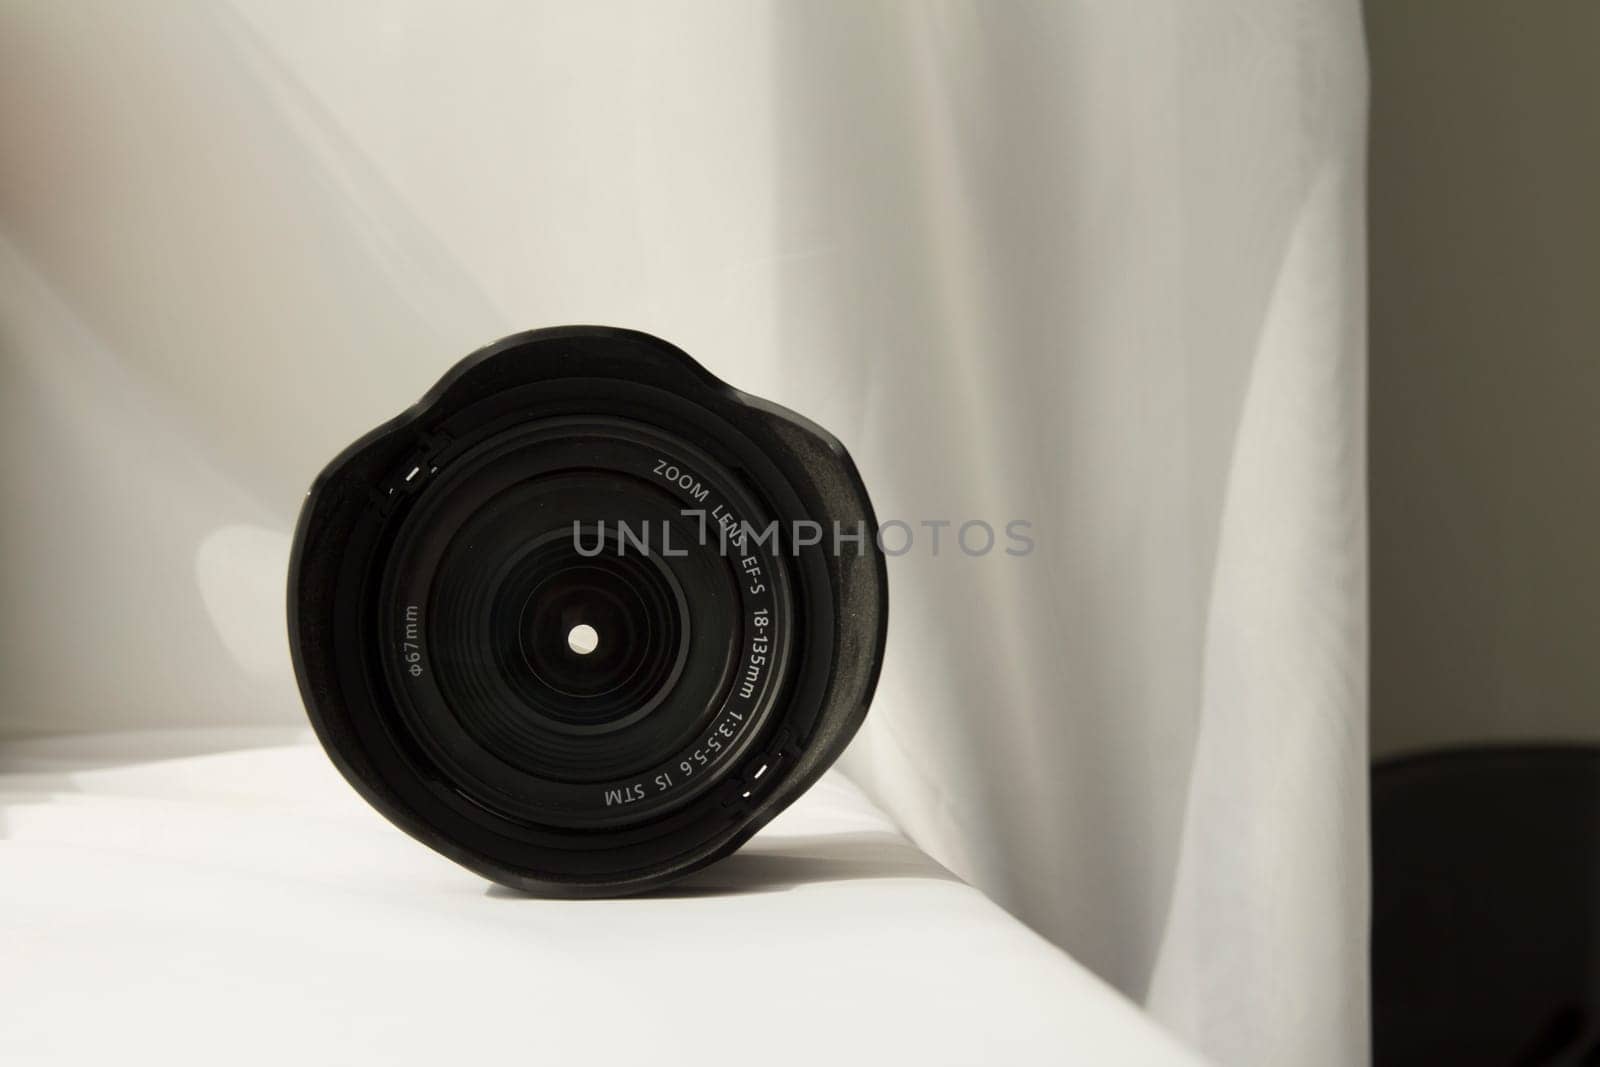 Black camera zoom lens on white cloth.